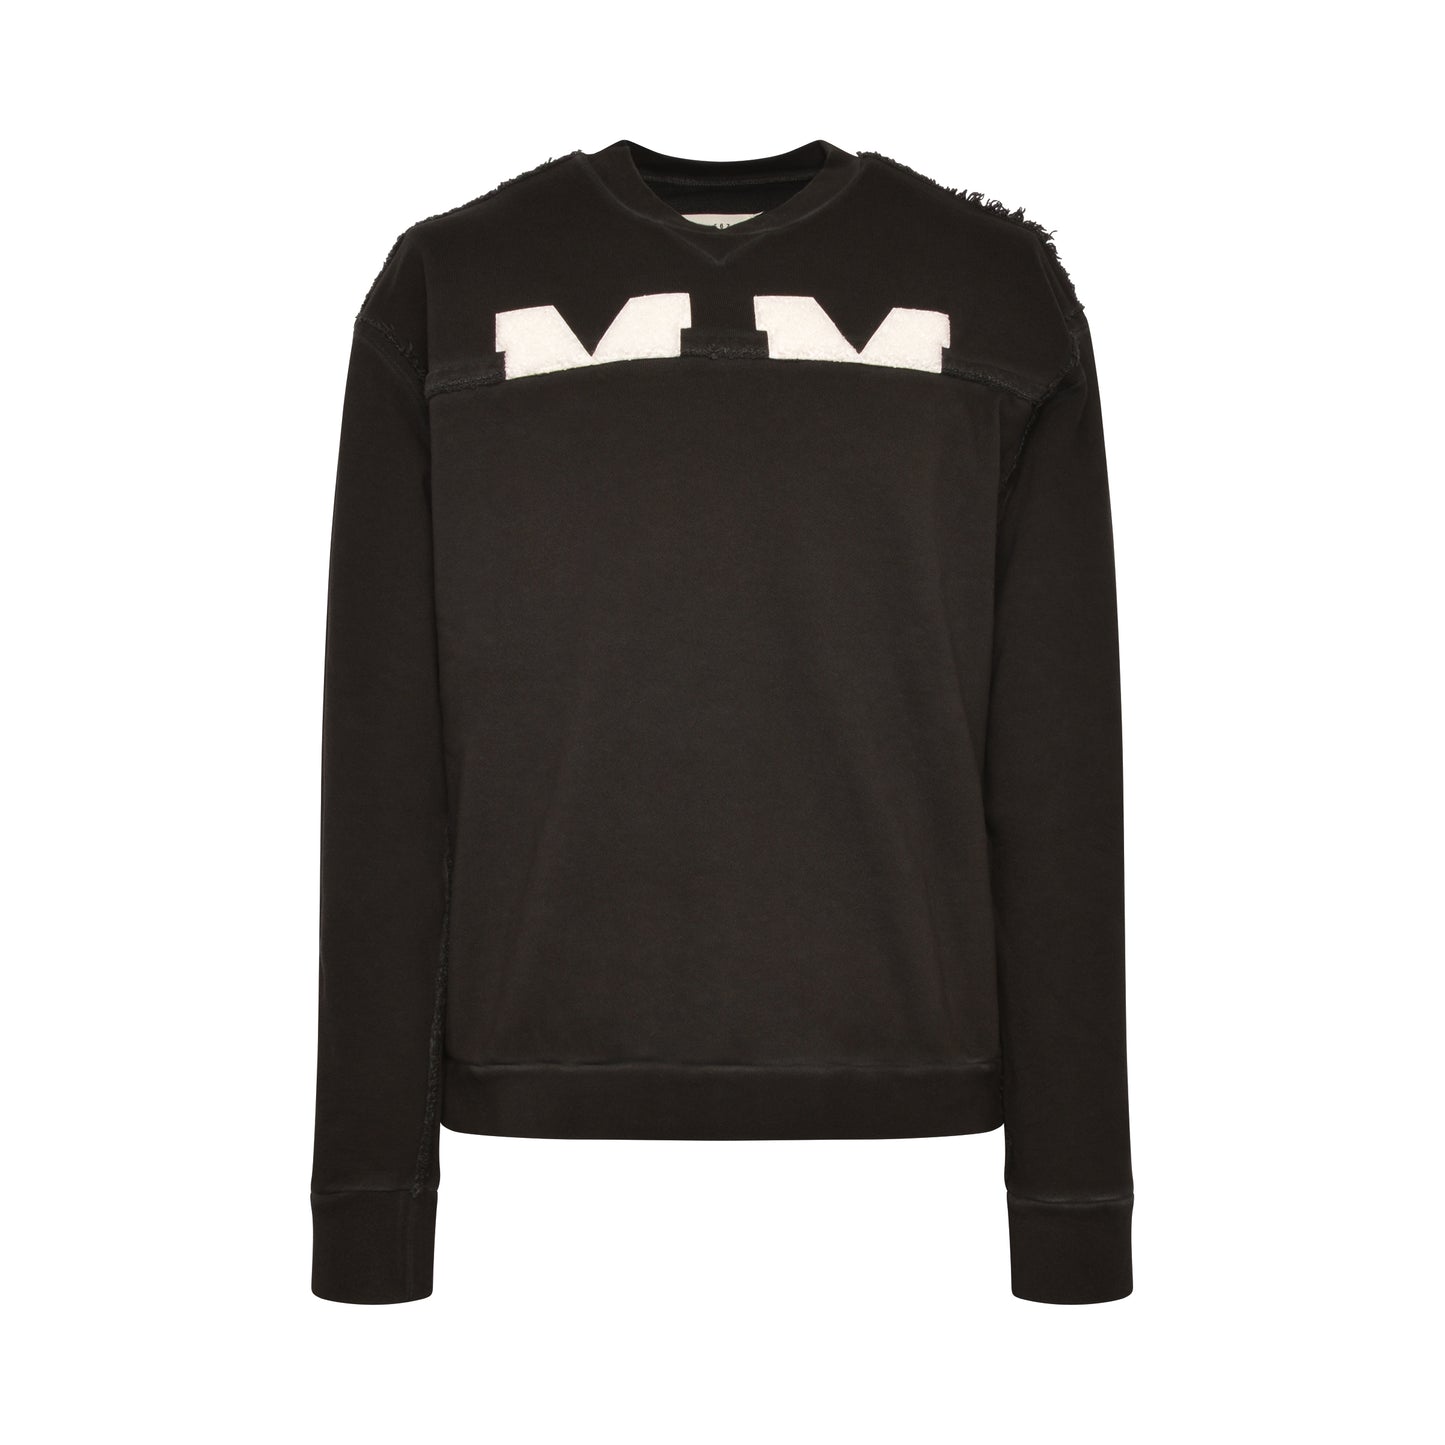 MM Patch Sweatshirt in Black